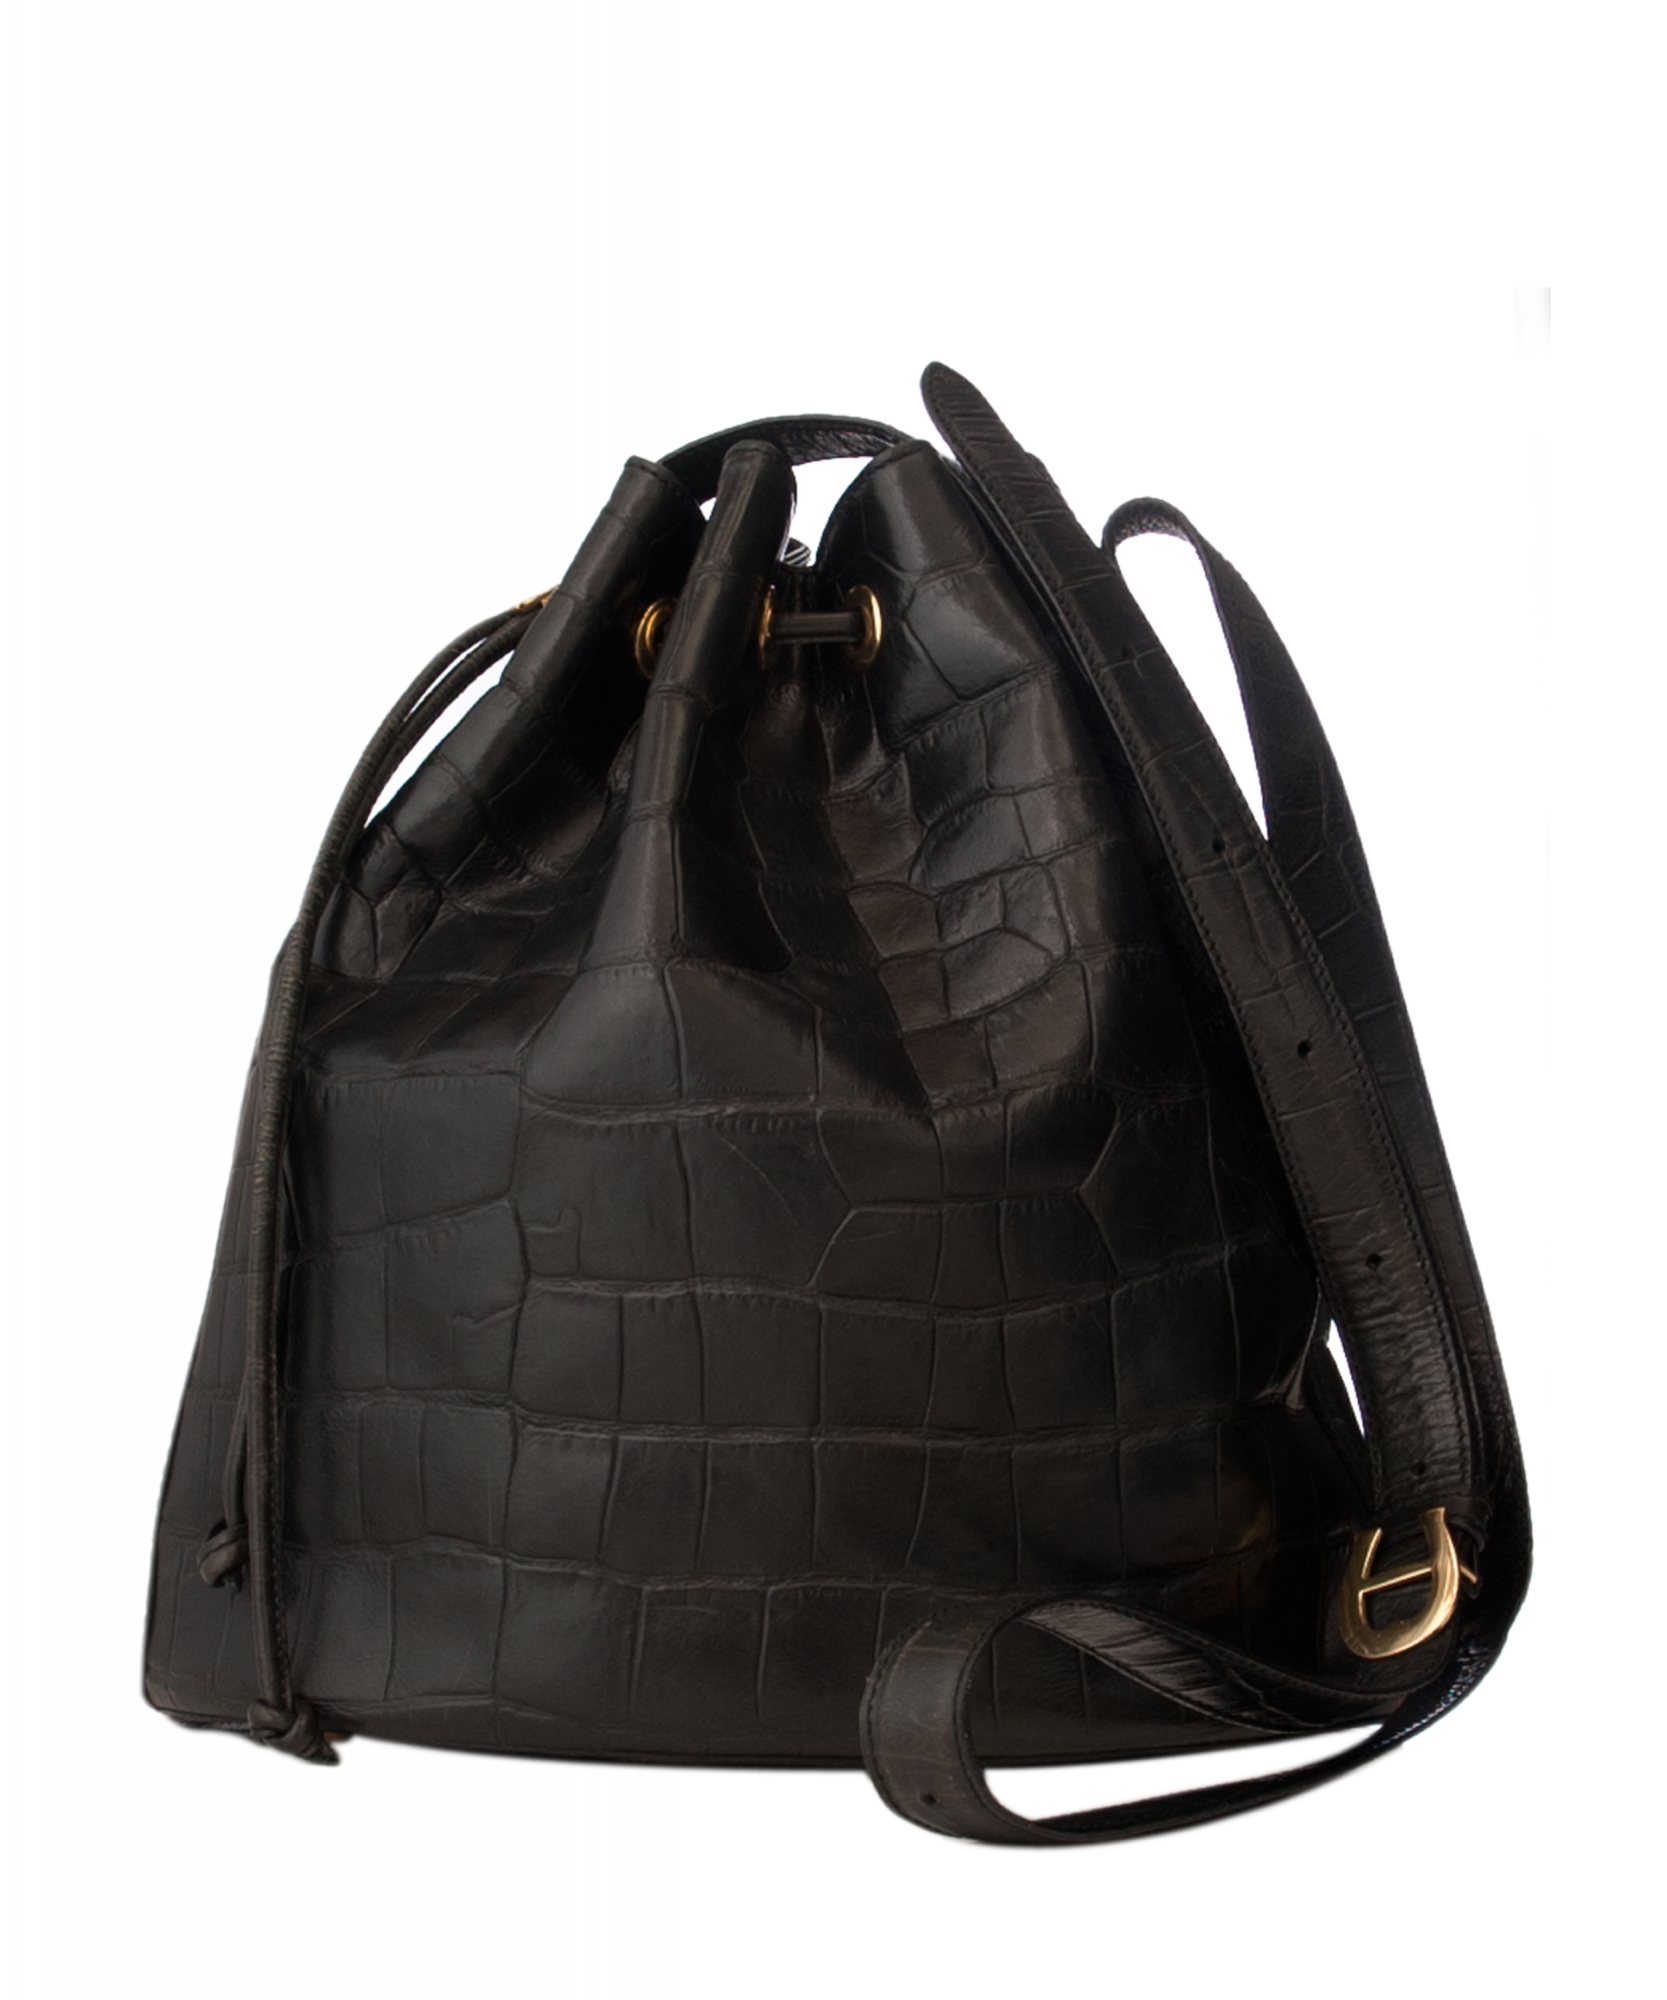 black leather croc bag